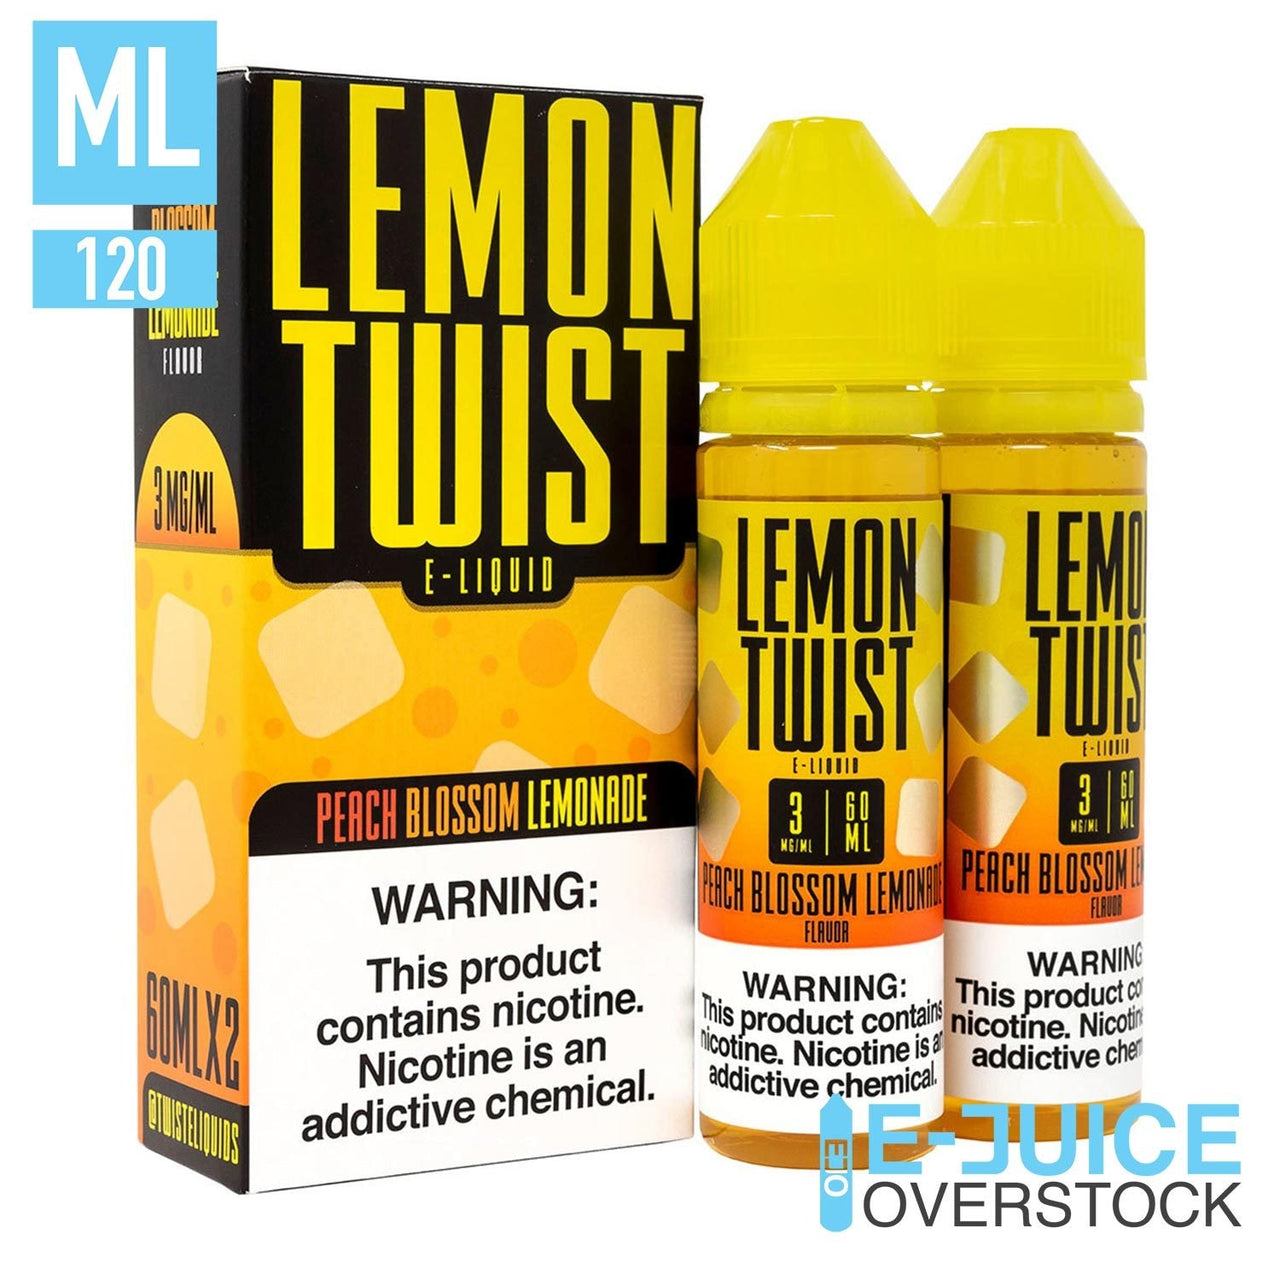 YELLOW PEACH (Peach Blossom Lemonade) by Lemon Twist 2x60ML EJUICE - EJUICEOVERSTOCK.COM